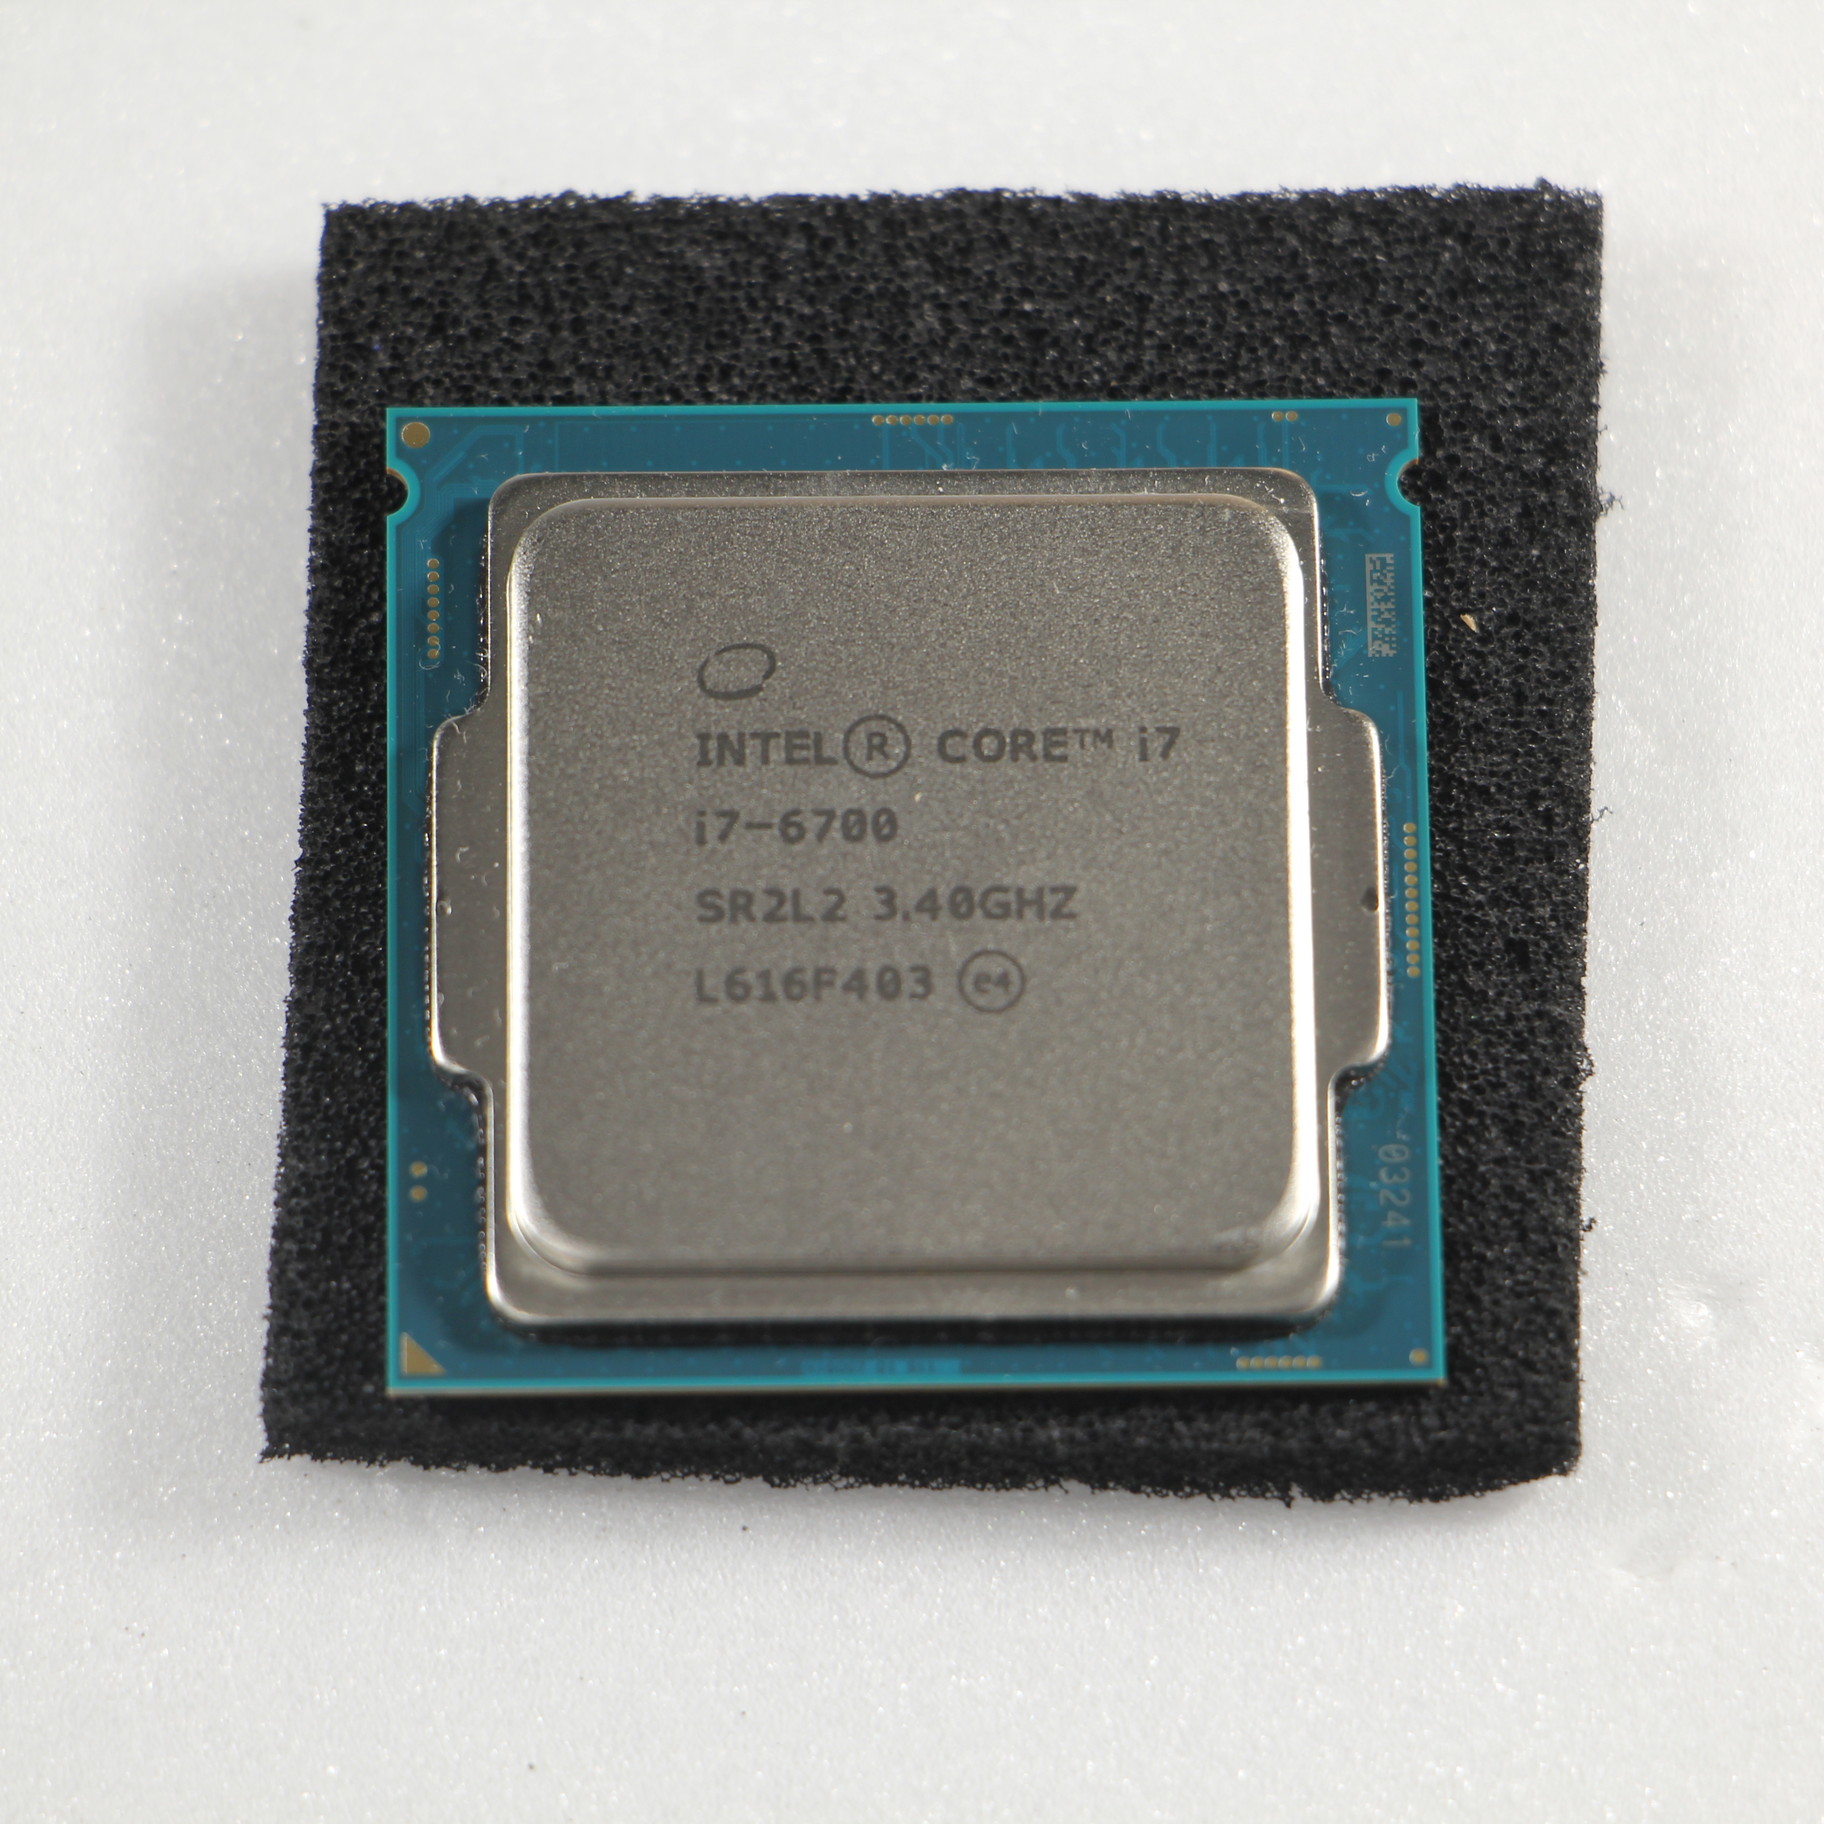 Intel Core i7-6700 3.4GHz